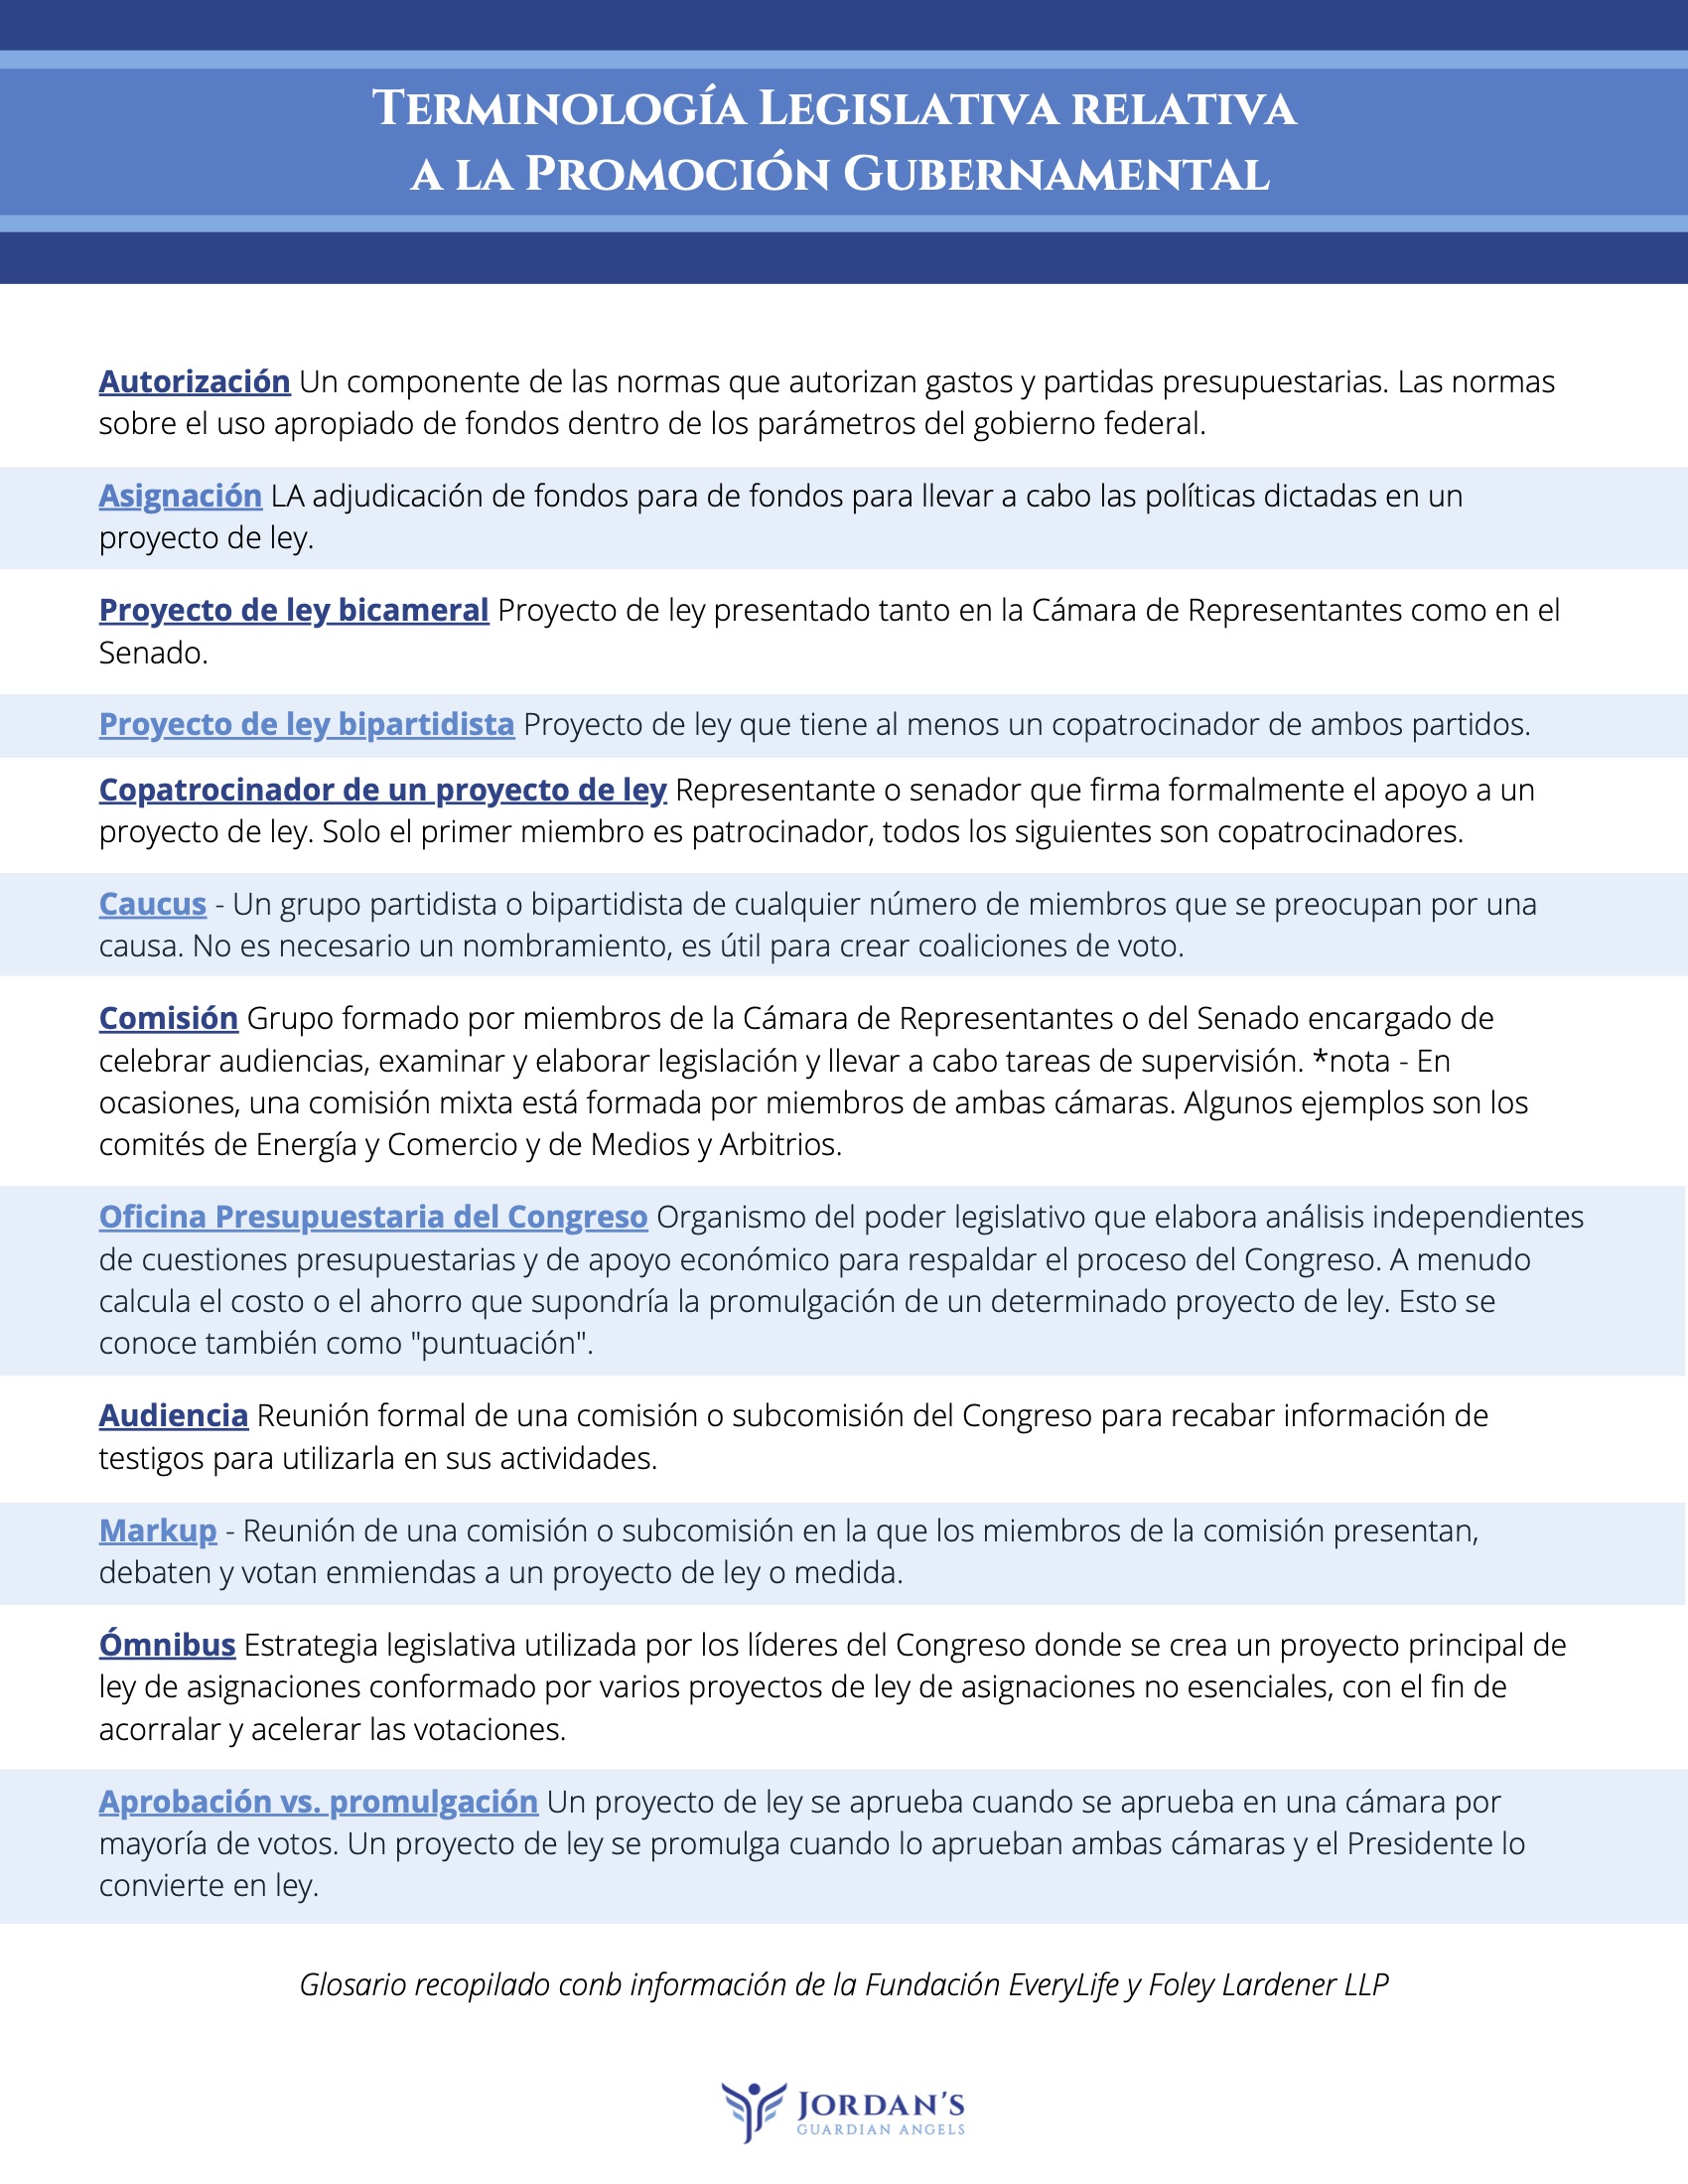 Legislative Terminology - Spanish